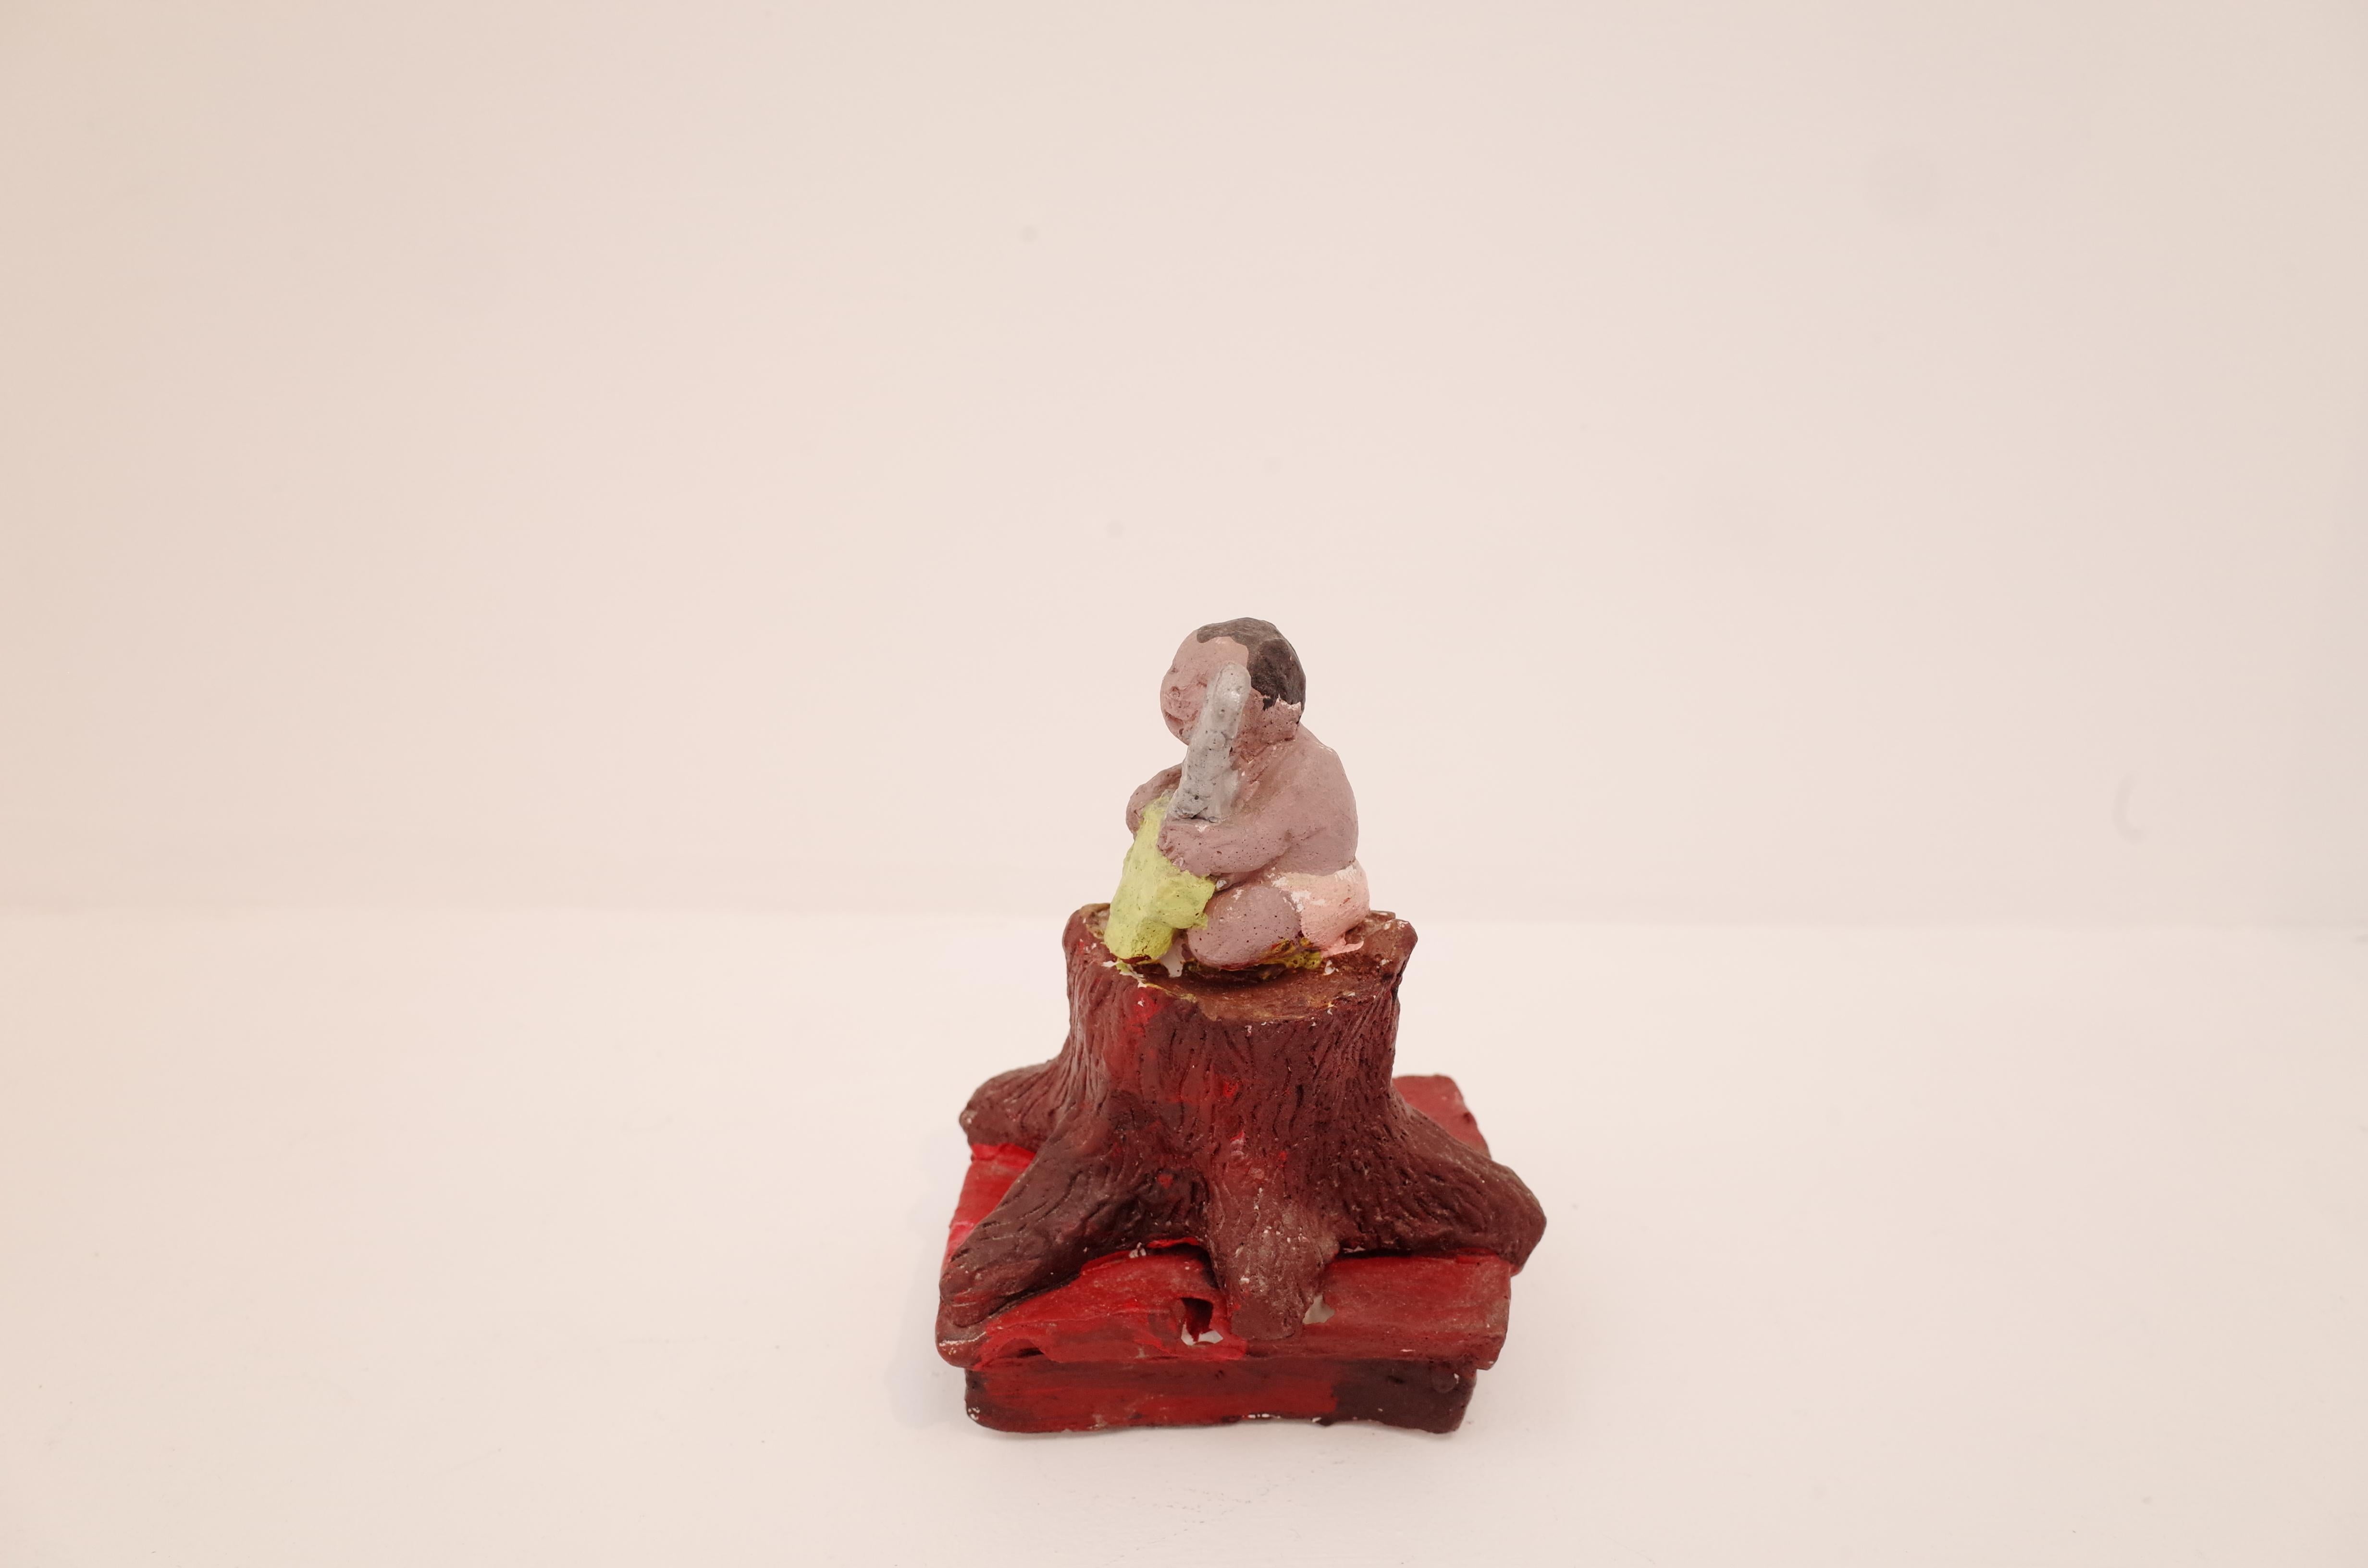 Chainsaw baby - Sculpture by Matt Freedman